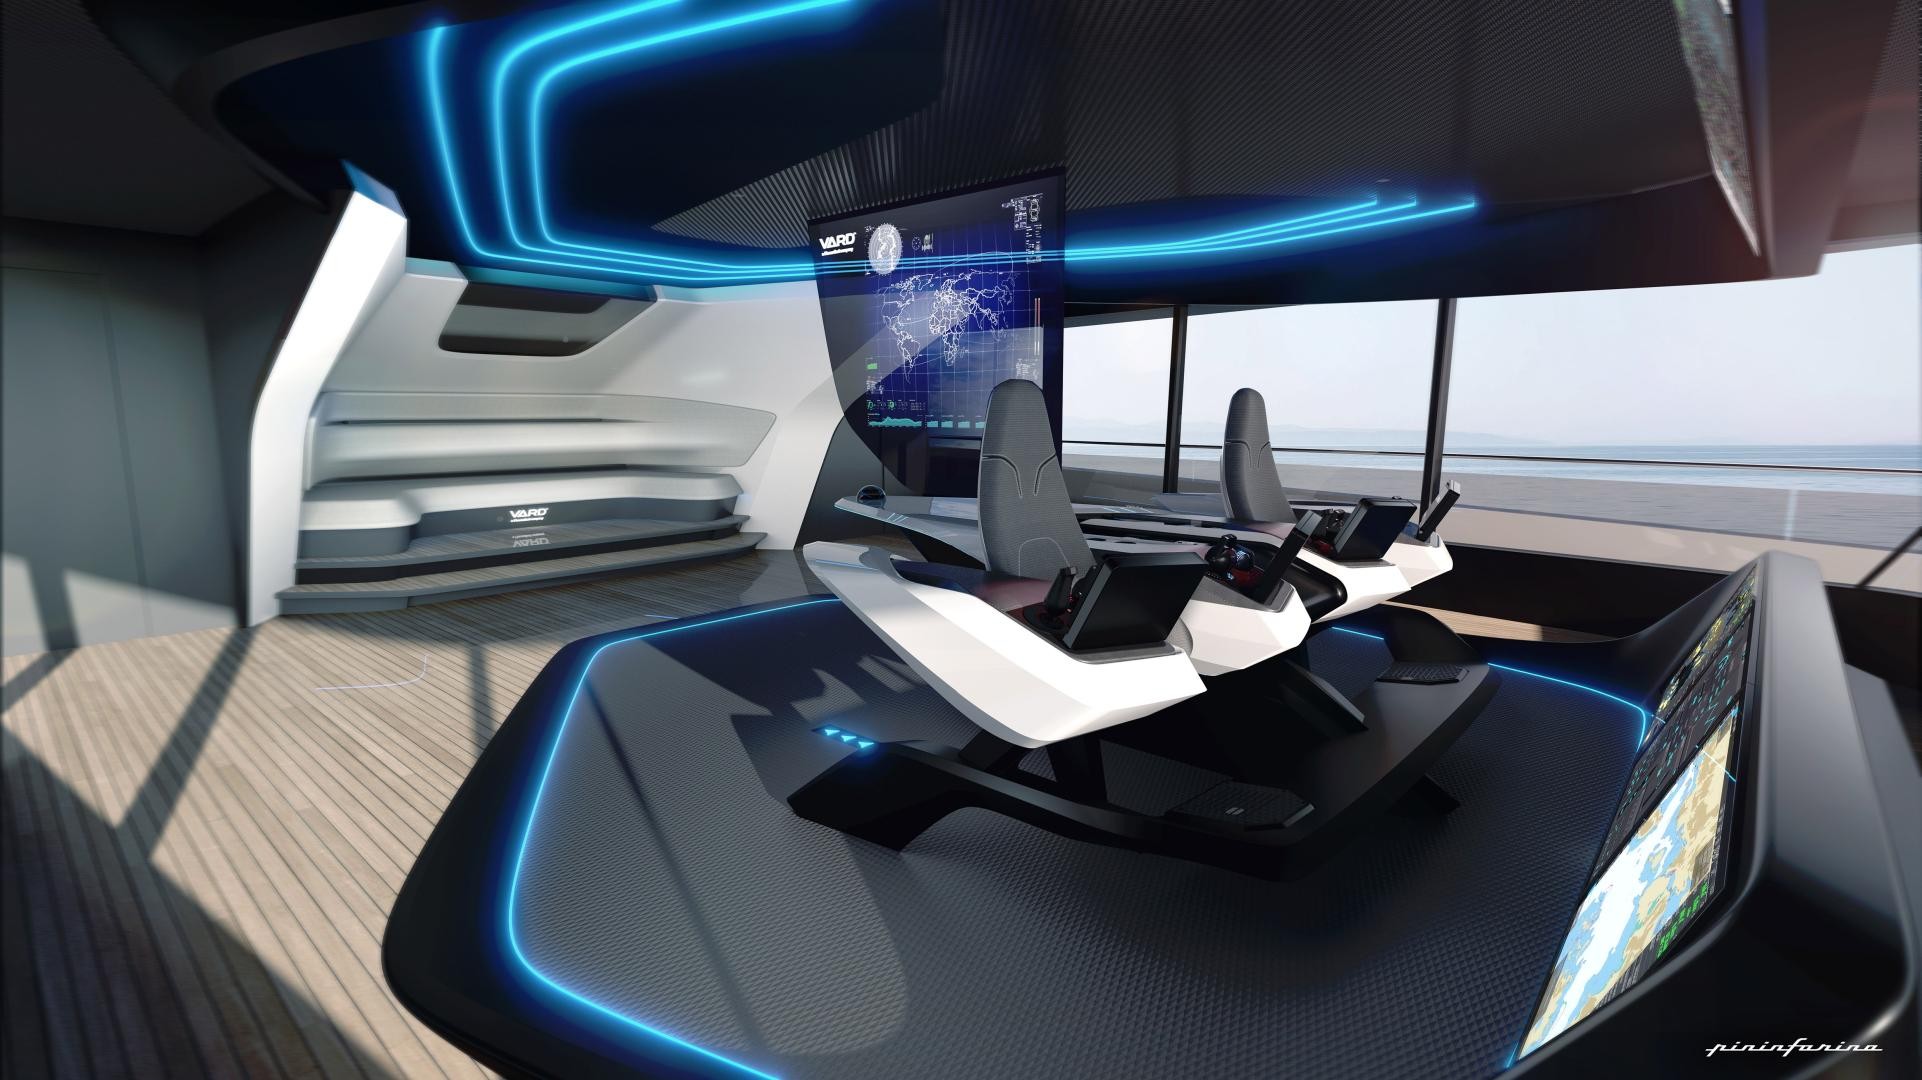 Pininfarina e Vard Electro presentano una nuova helm station al Monaco Yacht Show